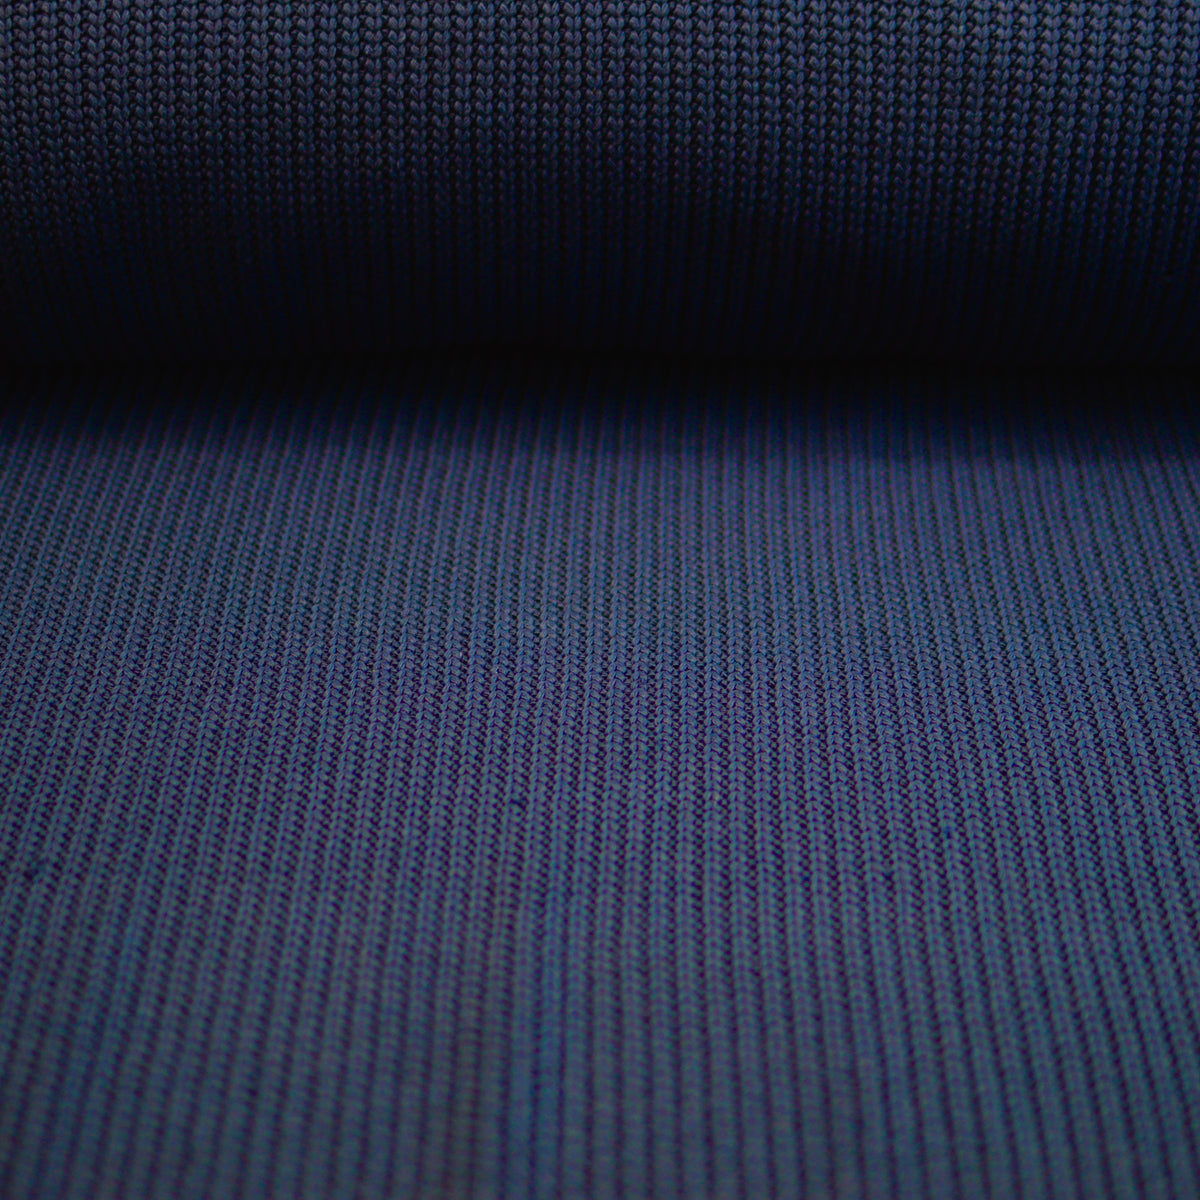 Big Knit - dunkelblau Fabric poshpinks